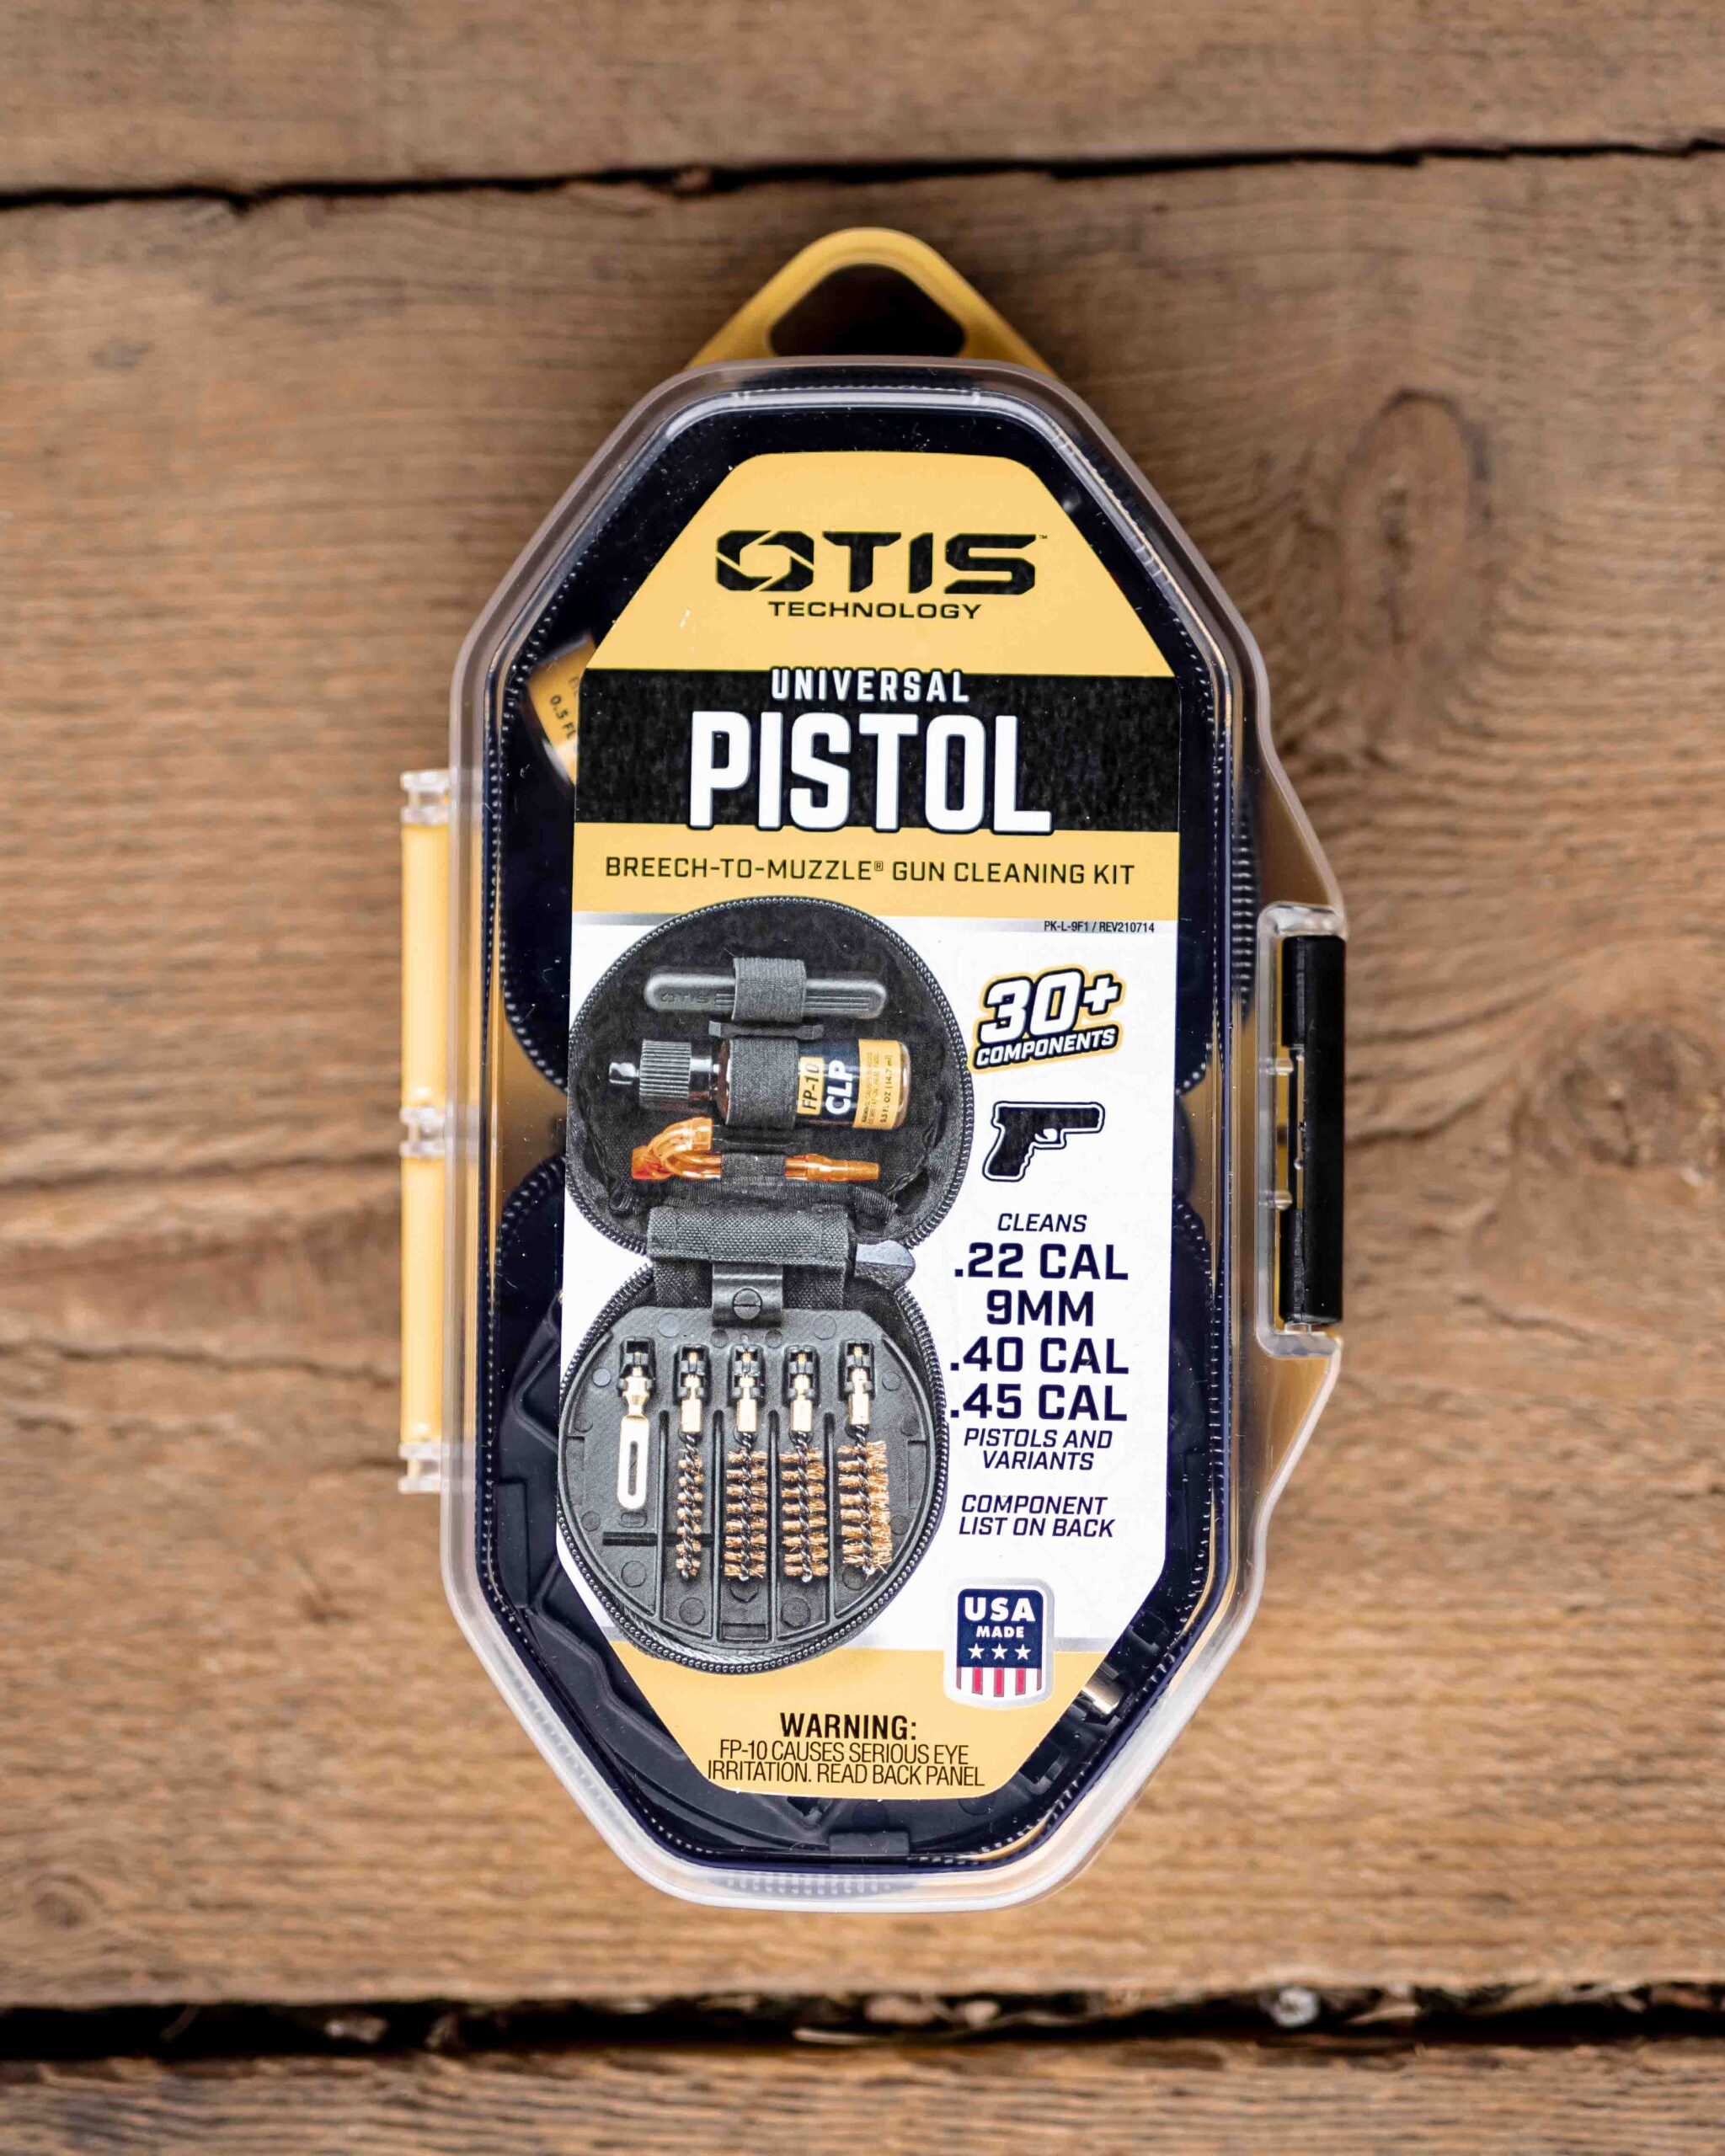 OTIS Universal Pistol Cleaning Kit